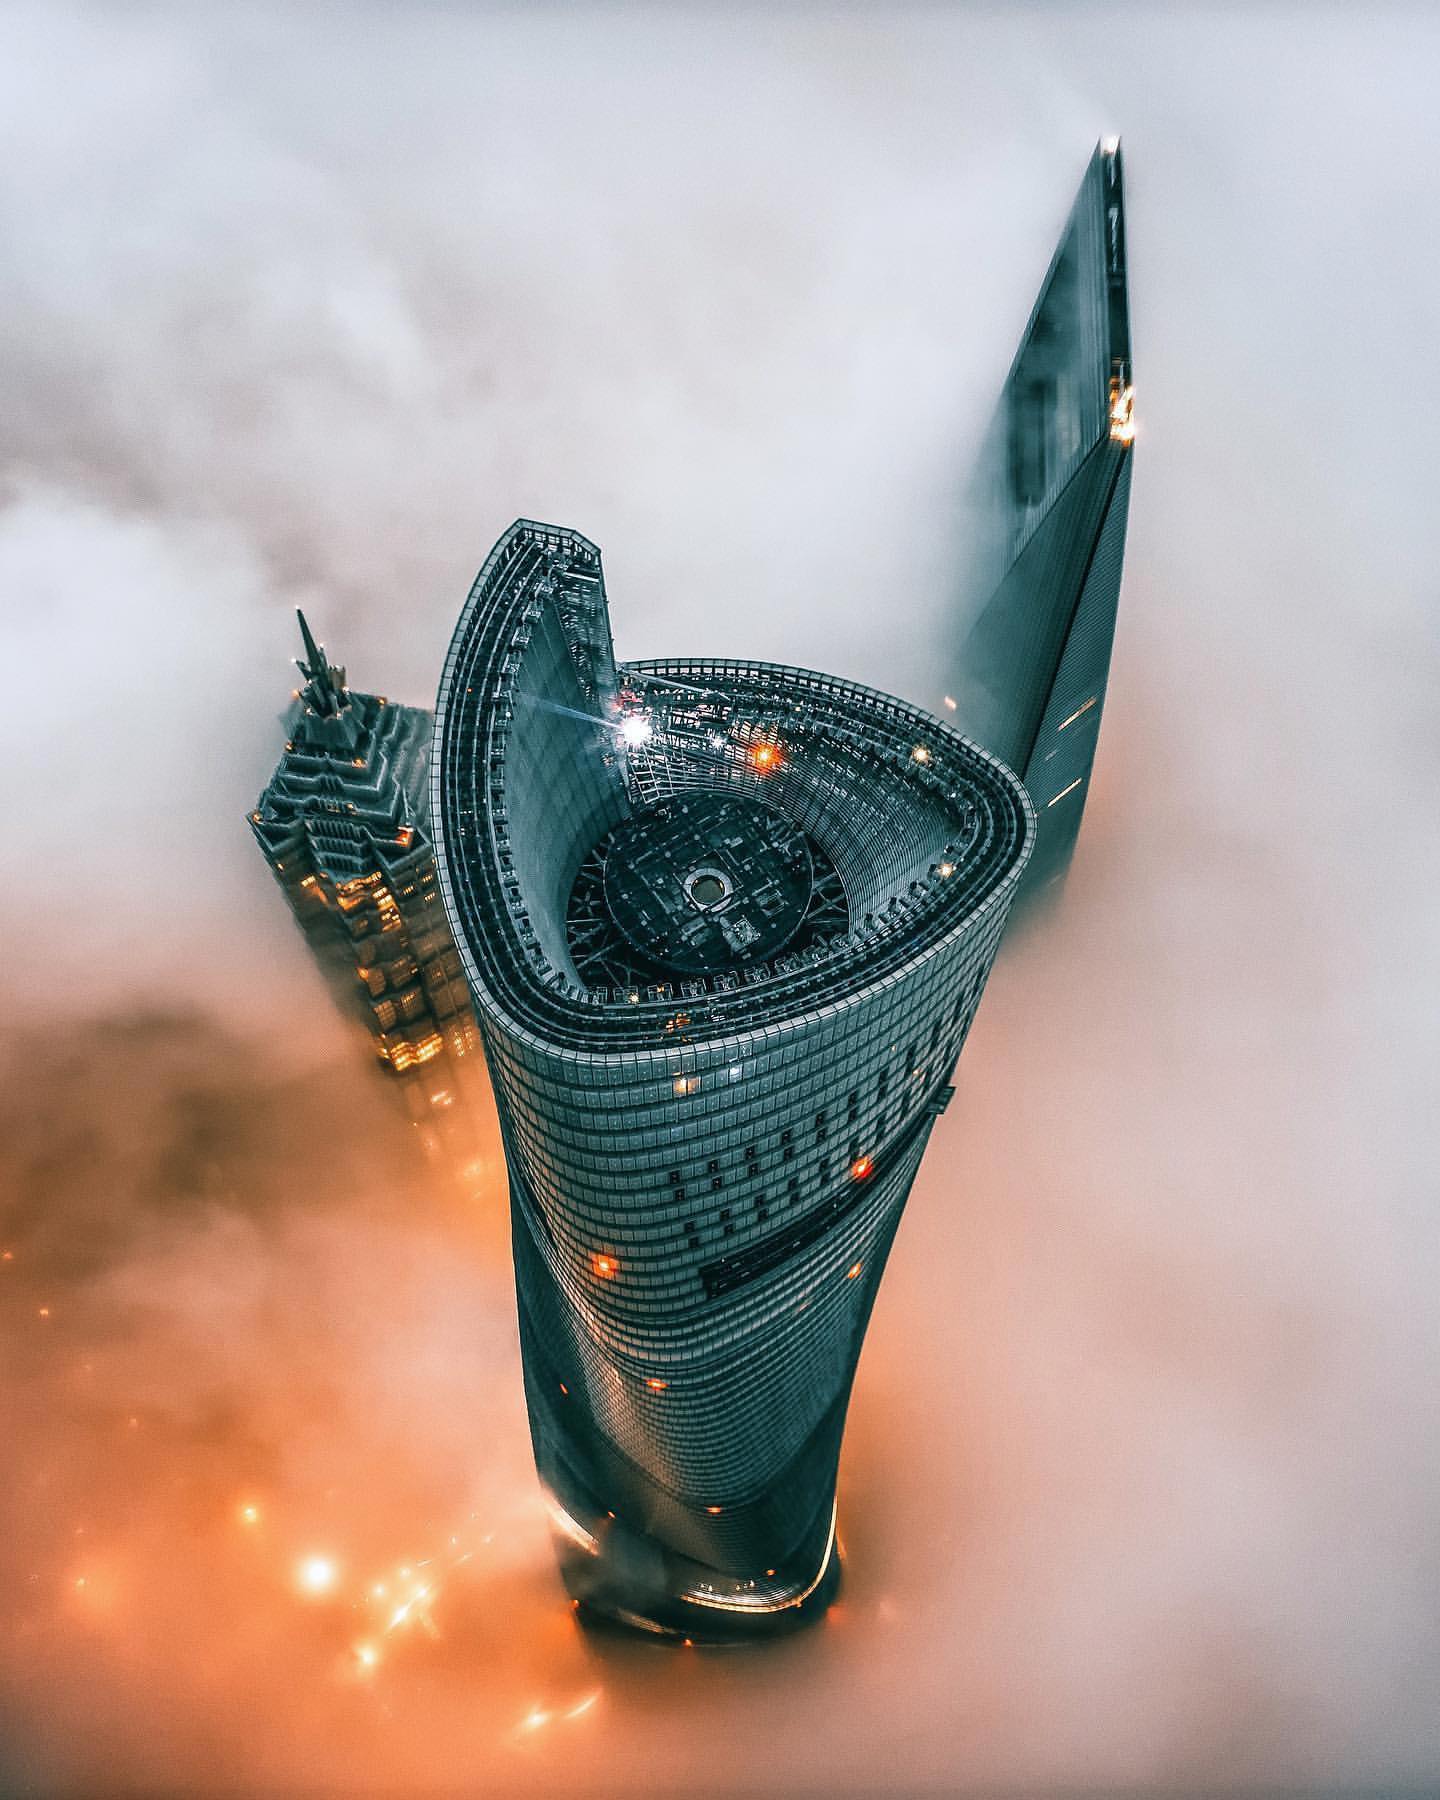 1440x1800, 176 Kb / облака, туман, высота, здание, небоскрёб, архитектура, огни, Шанхай